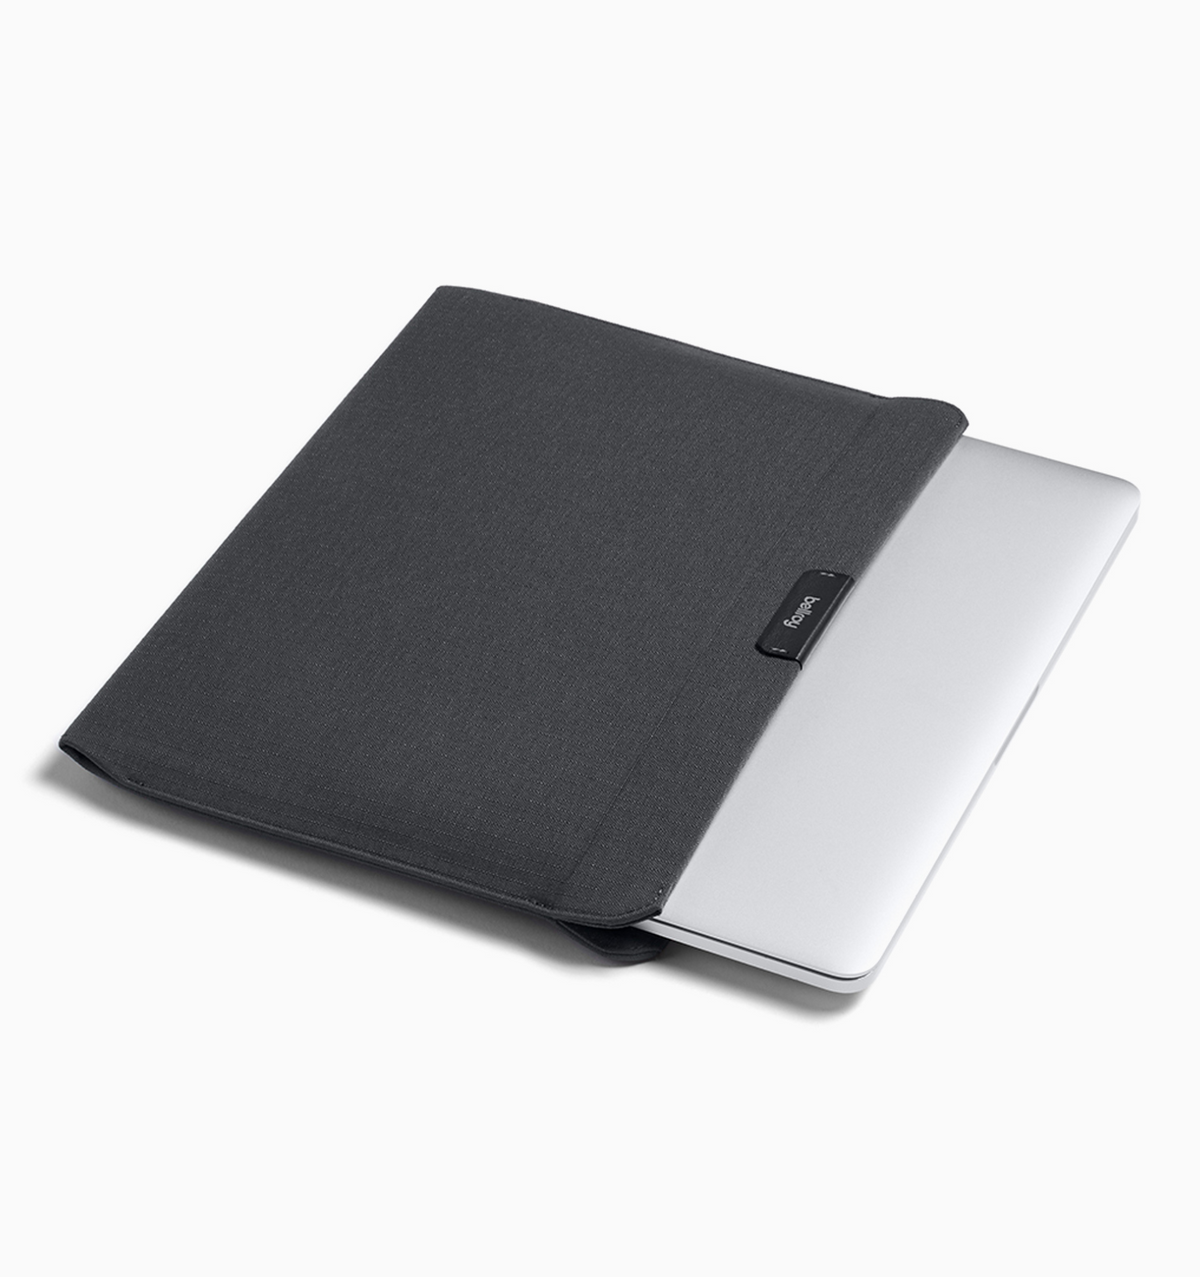 Bellroy 16" Laptop Sleeve - Basalt